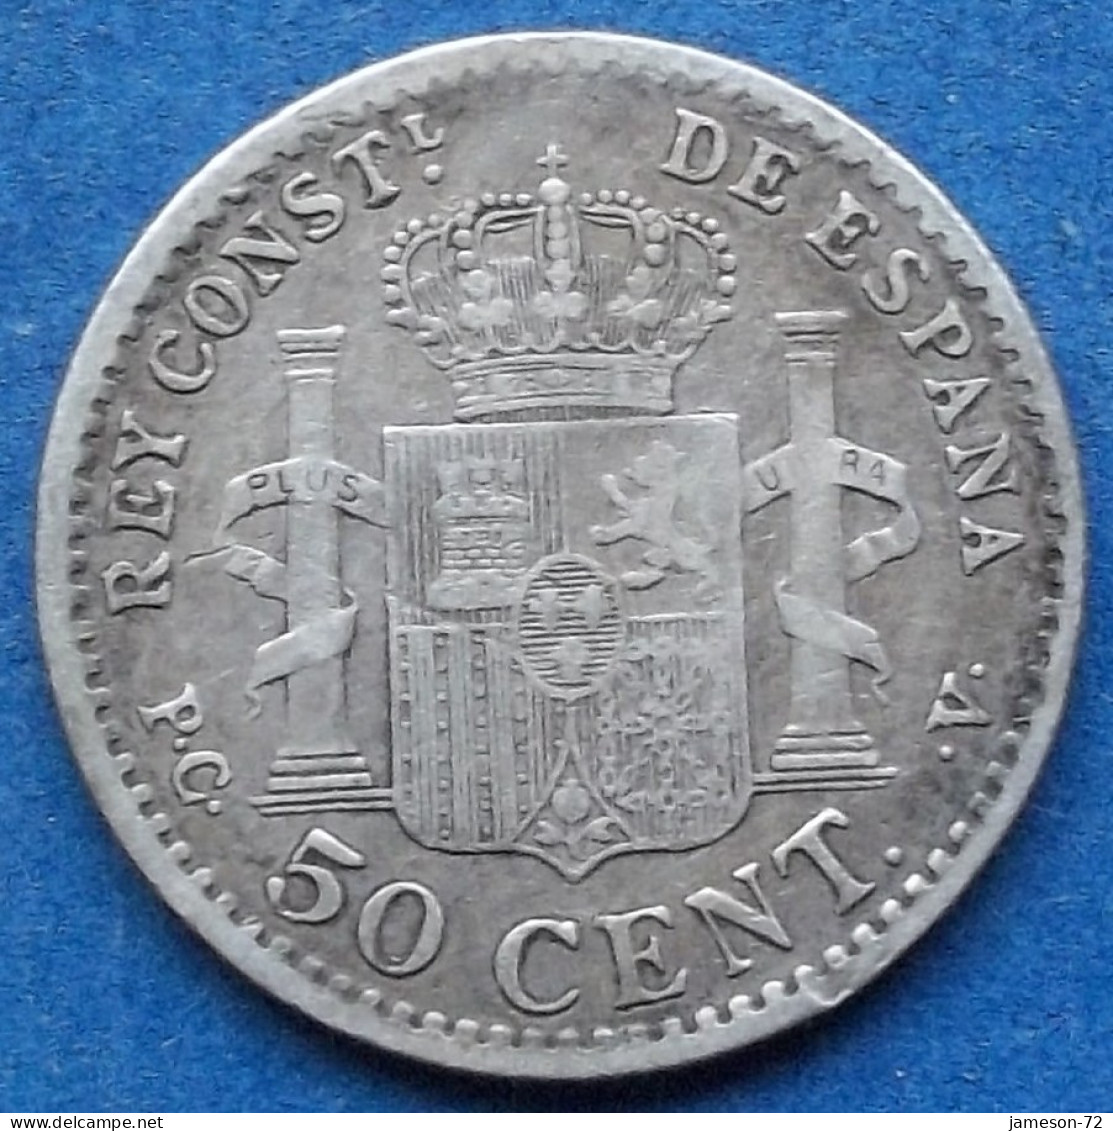 SPAIN - Silver 50 Centimos 1904 (10) PC V KM# 723 Alfonso XIII (1886-1931) - Edelweiss Coins - Primeras Acuñaciones